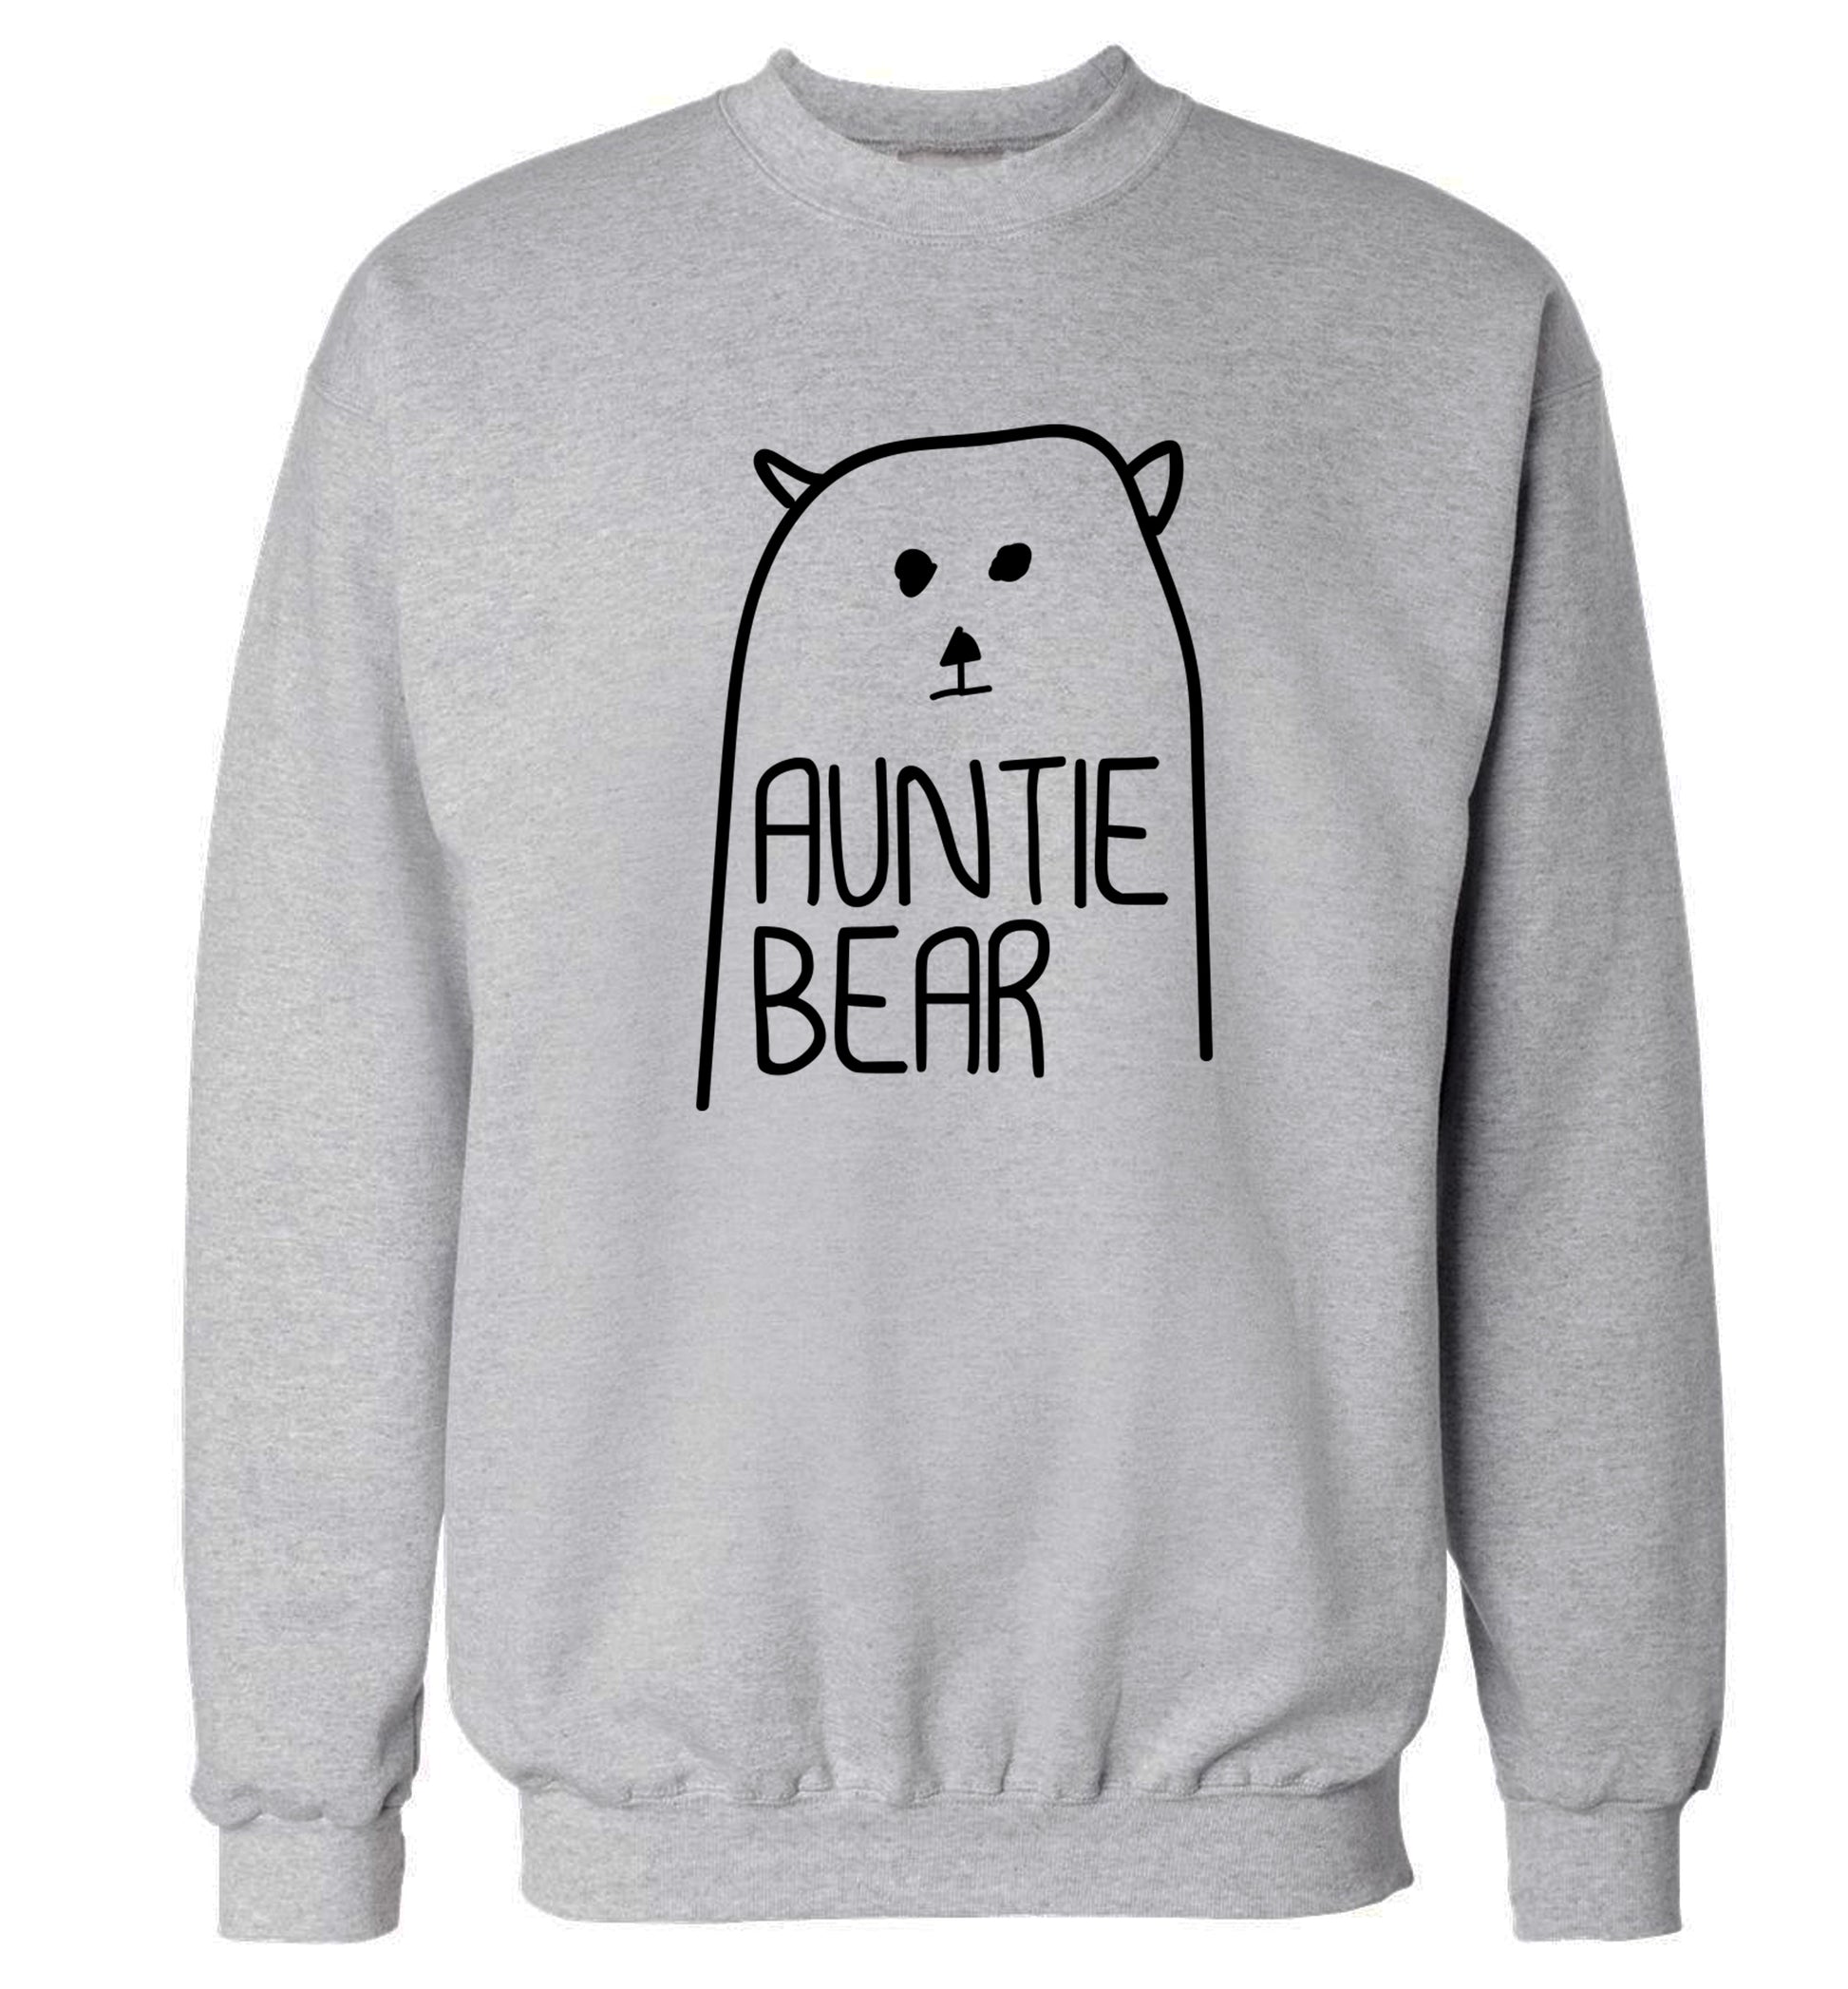 Auntie bear Adult's unisex grey Sweater 2XL